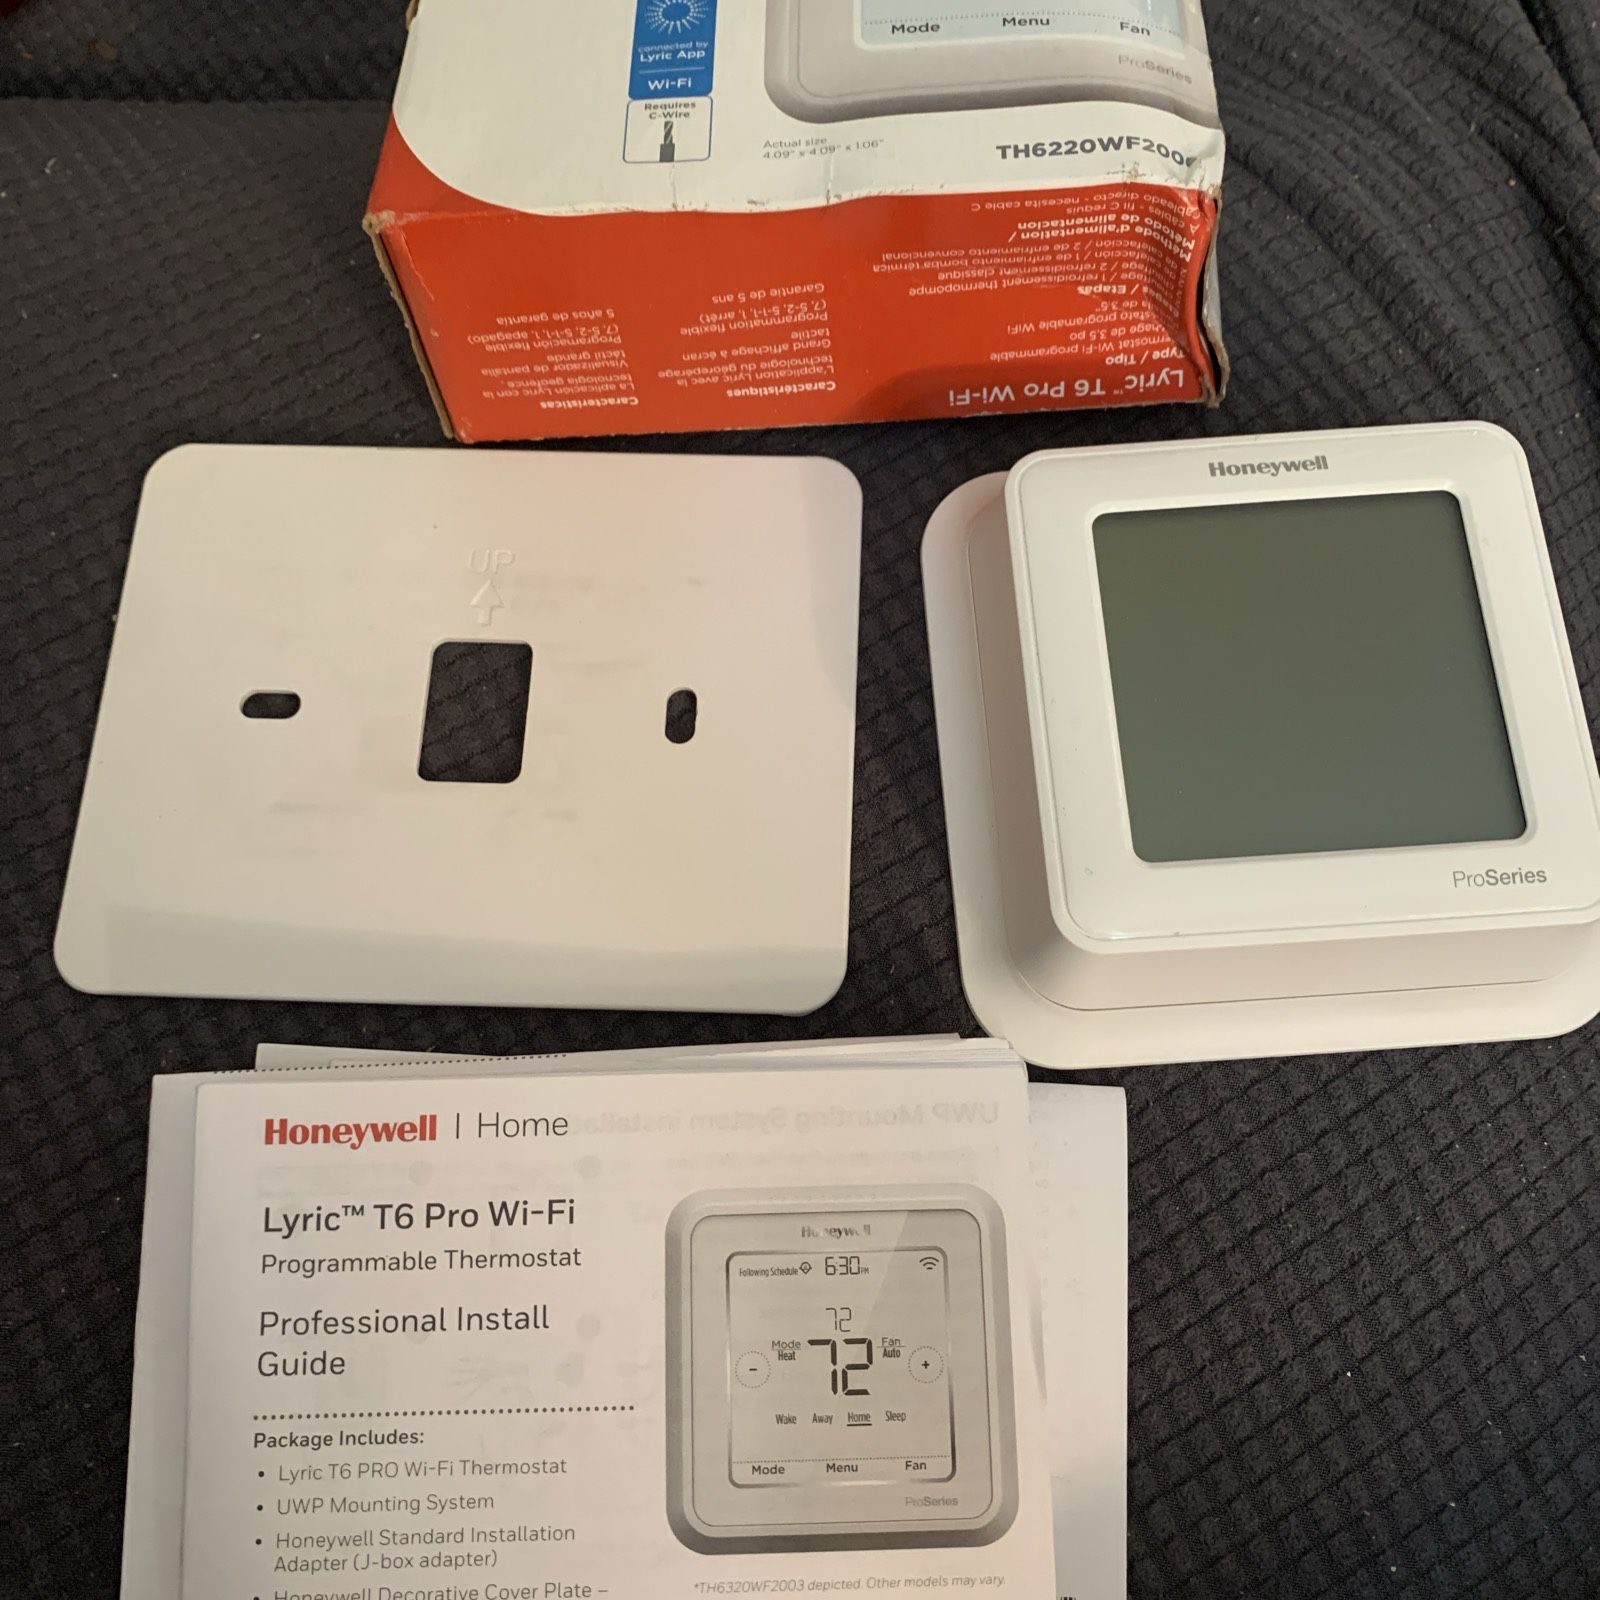  Lyric T6 Pro WiFi Programmable Thermostat